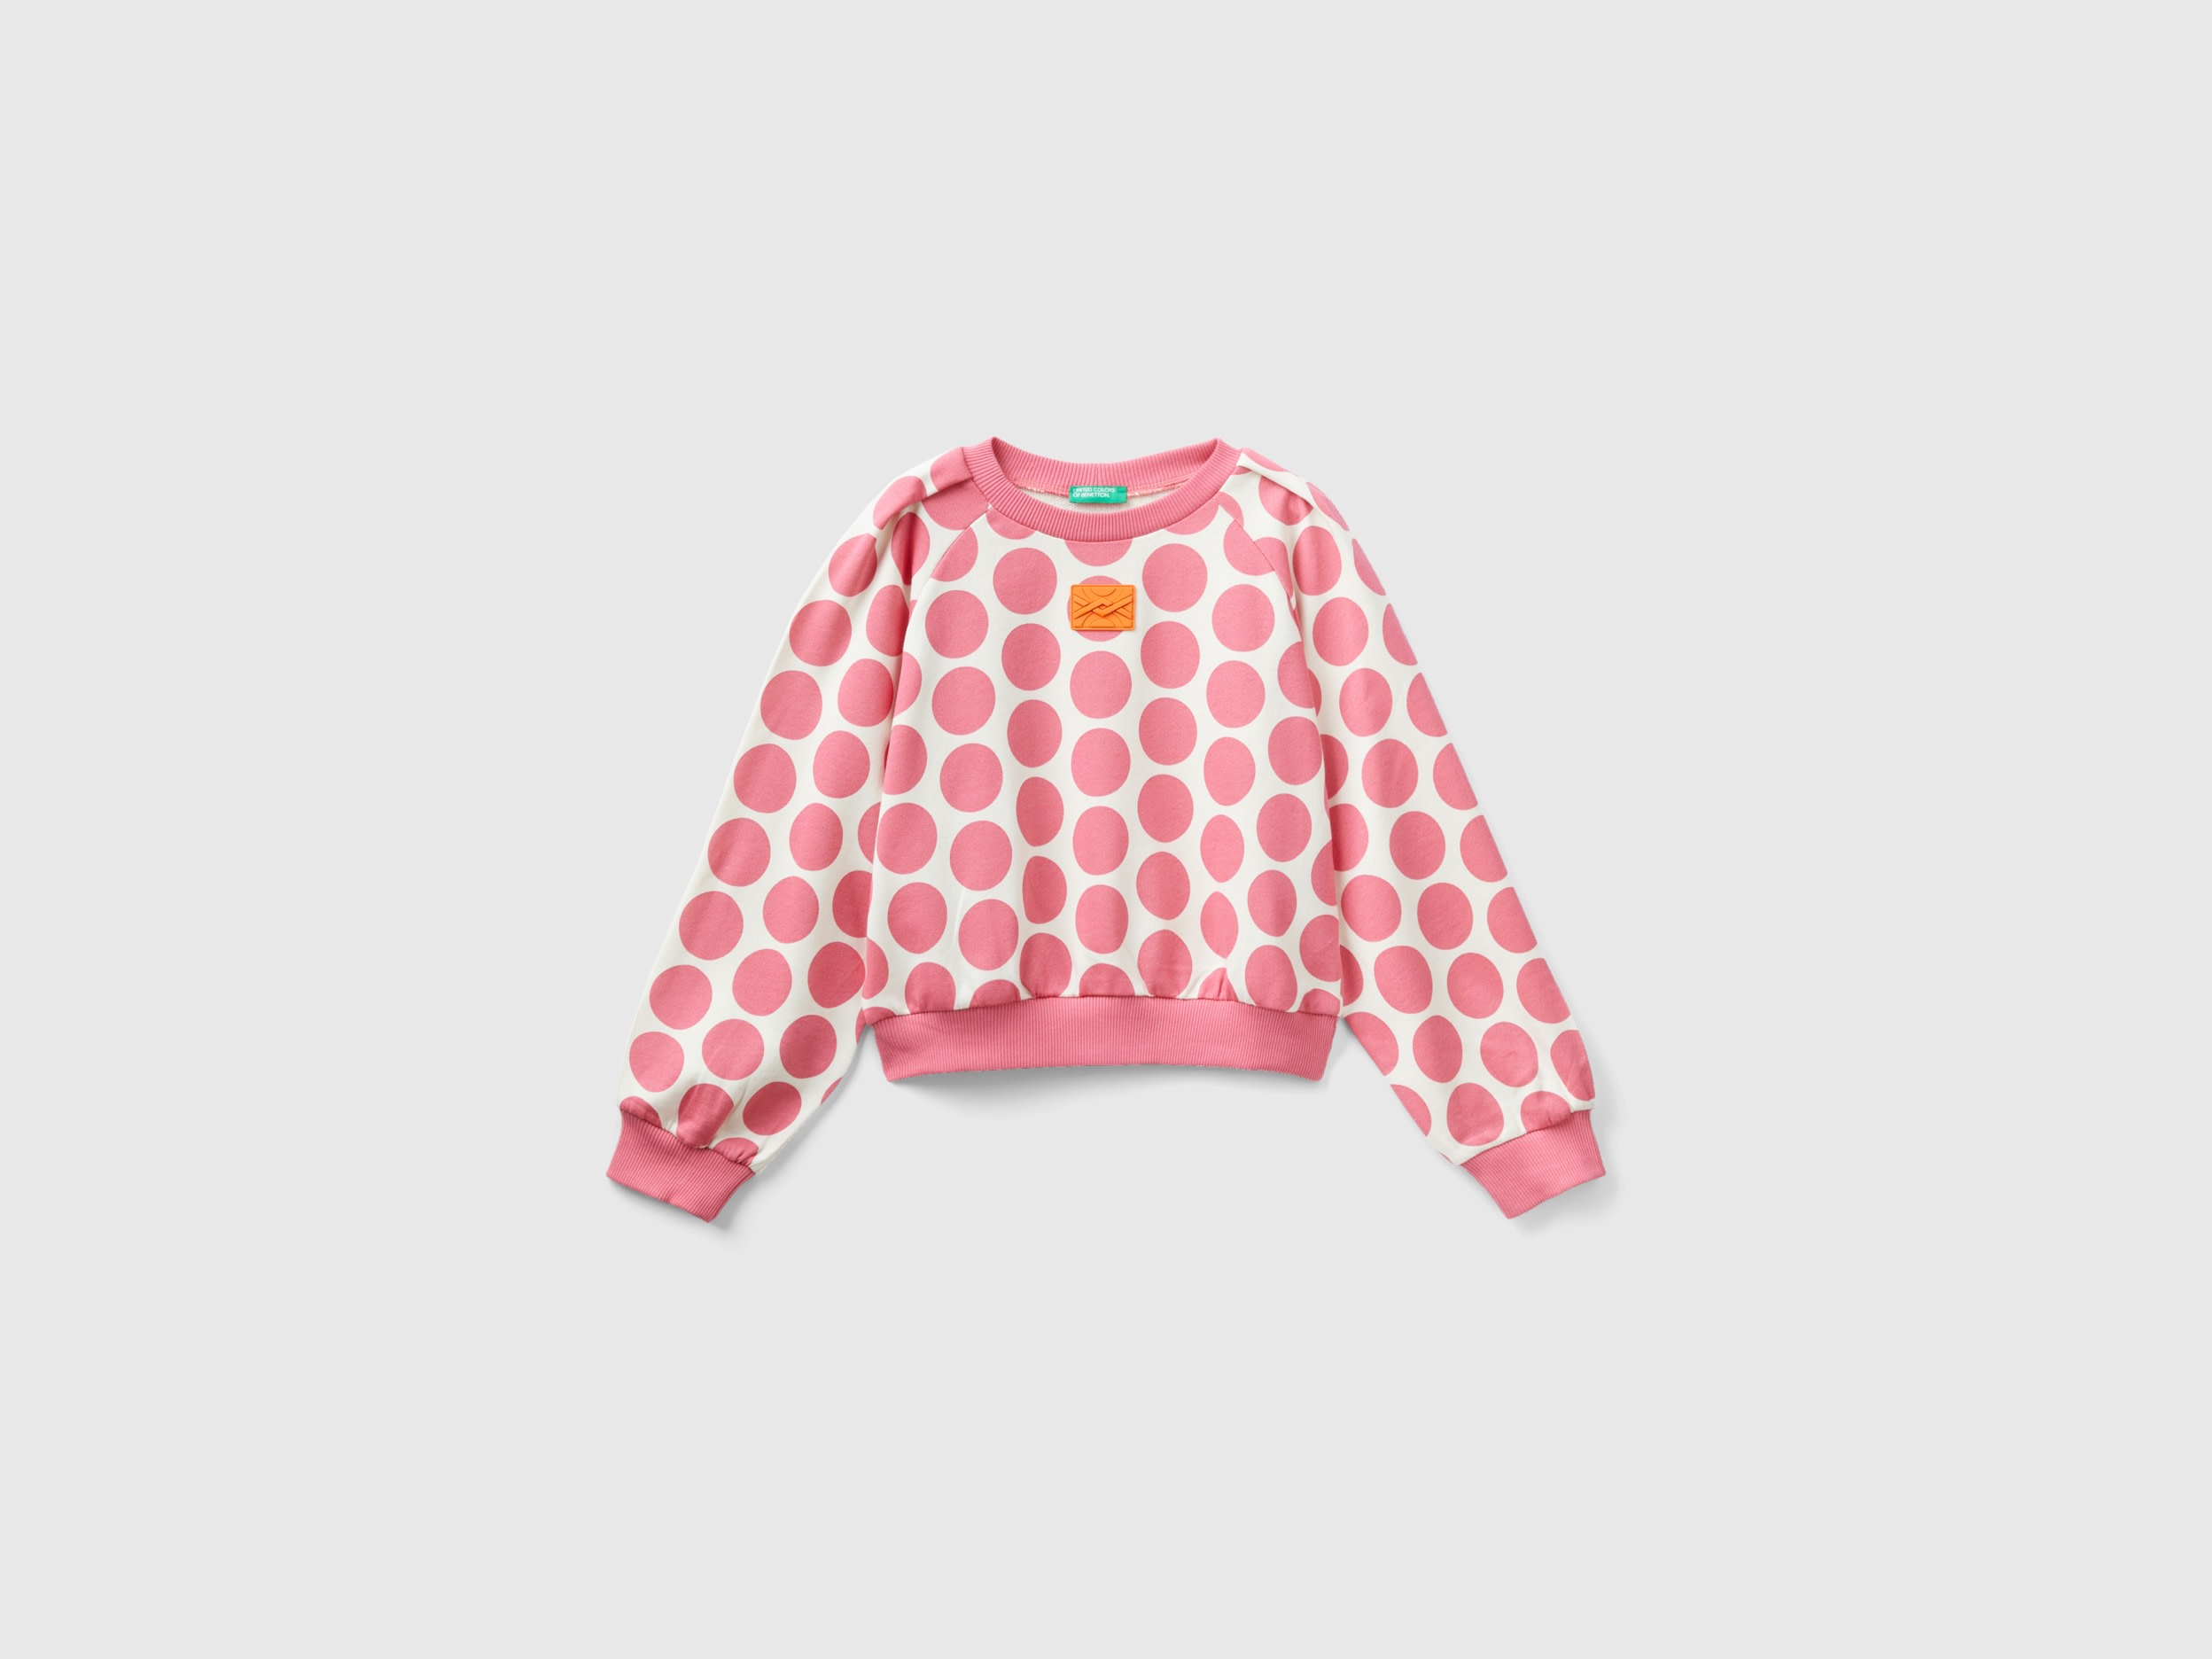 Benetton, 100% Cotton Sweatshirt With Polka Dots, size 2XL, Multi-color, Kids